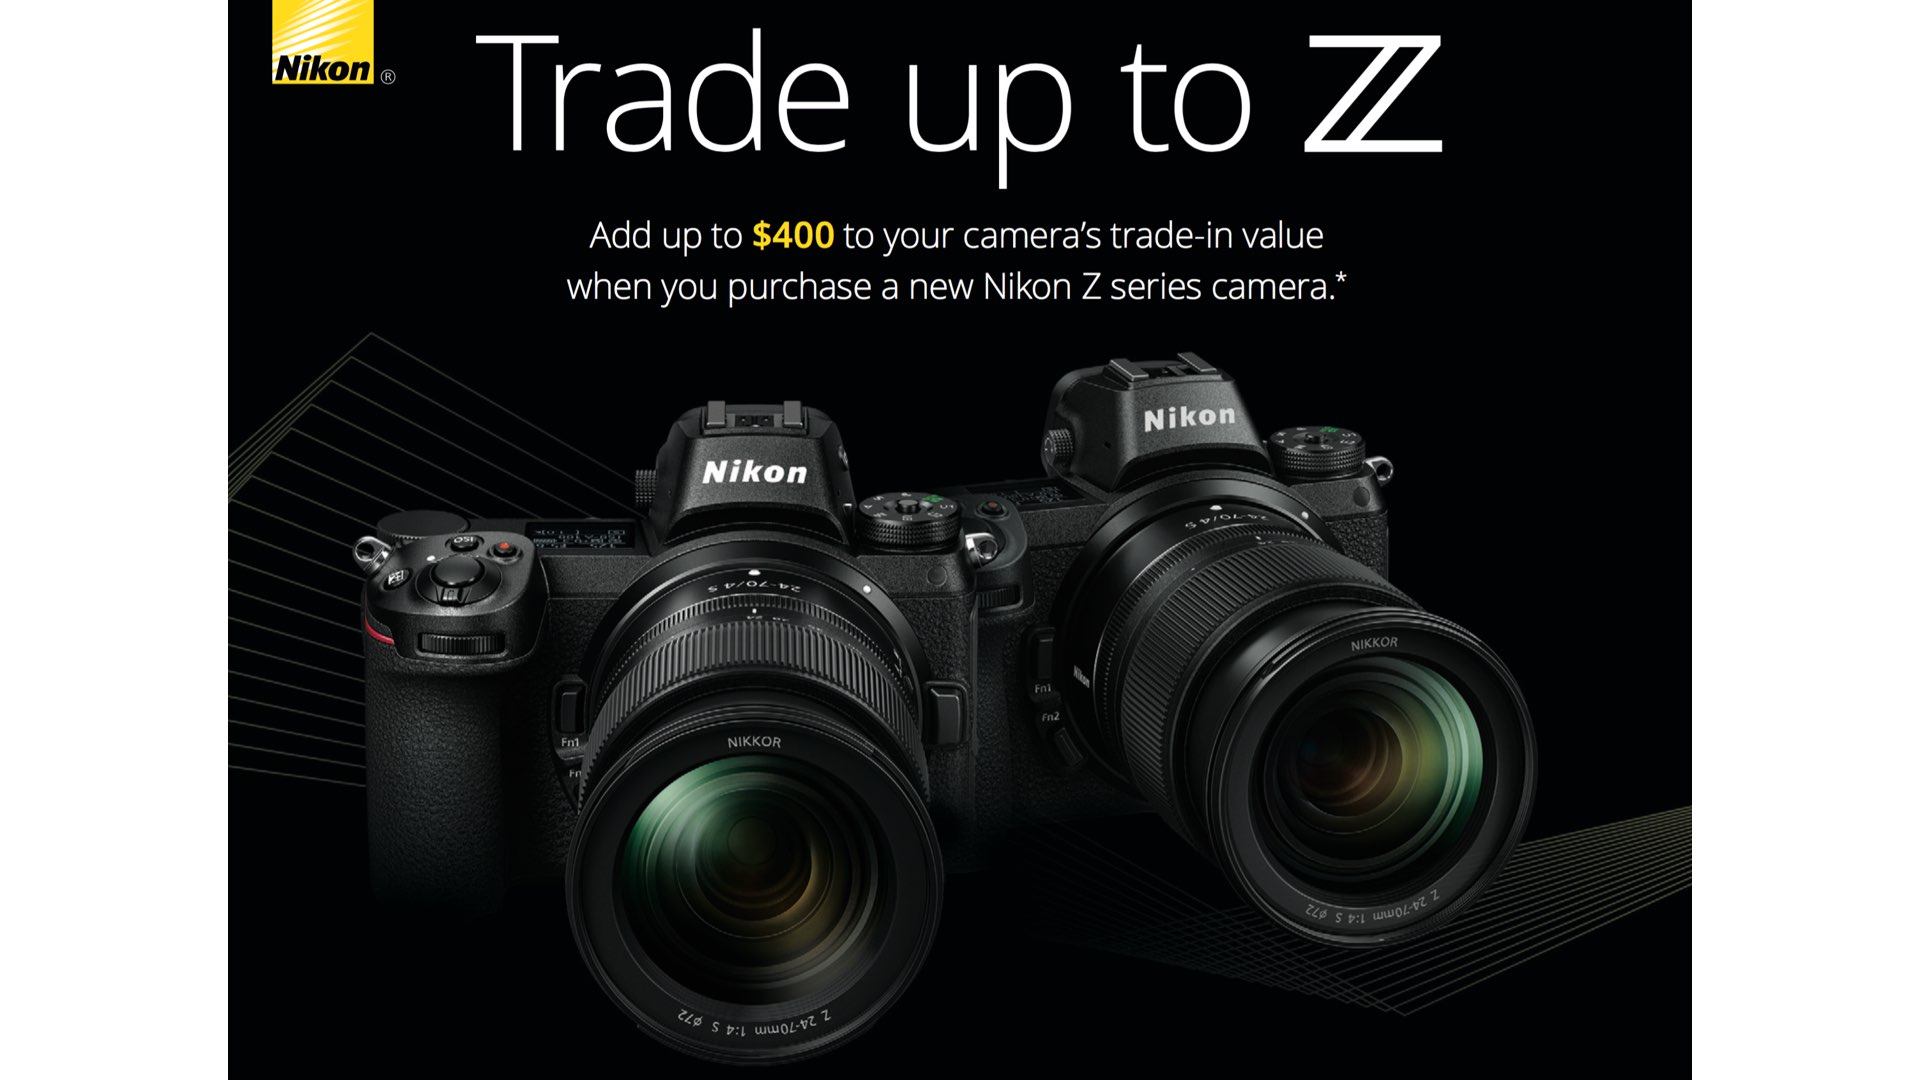 Nikon’s “Trade Up to Z” camera trade-in 